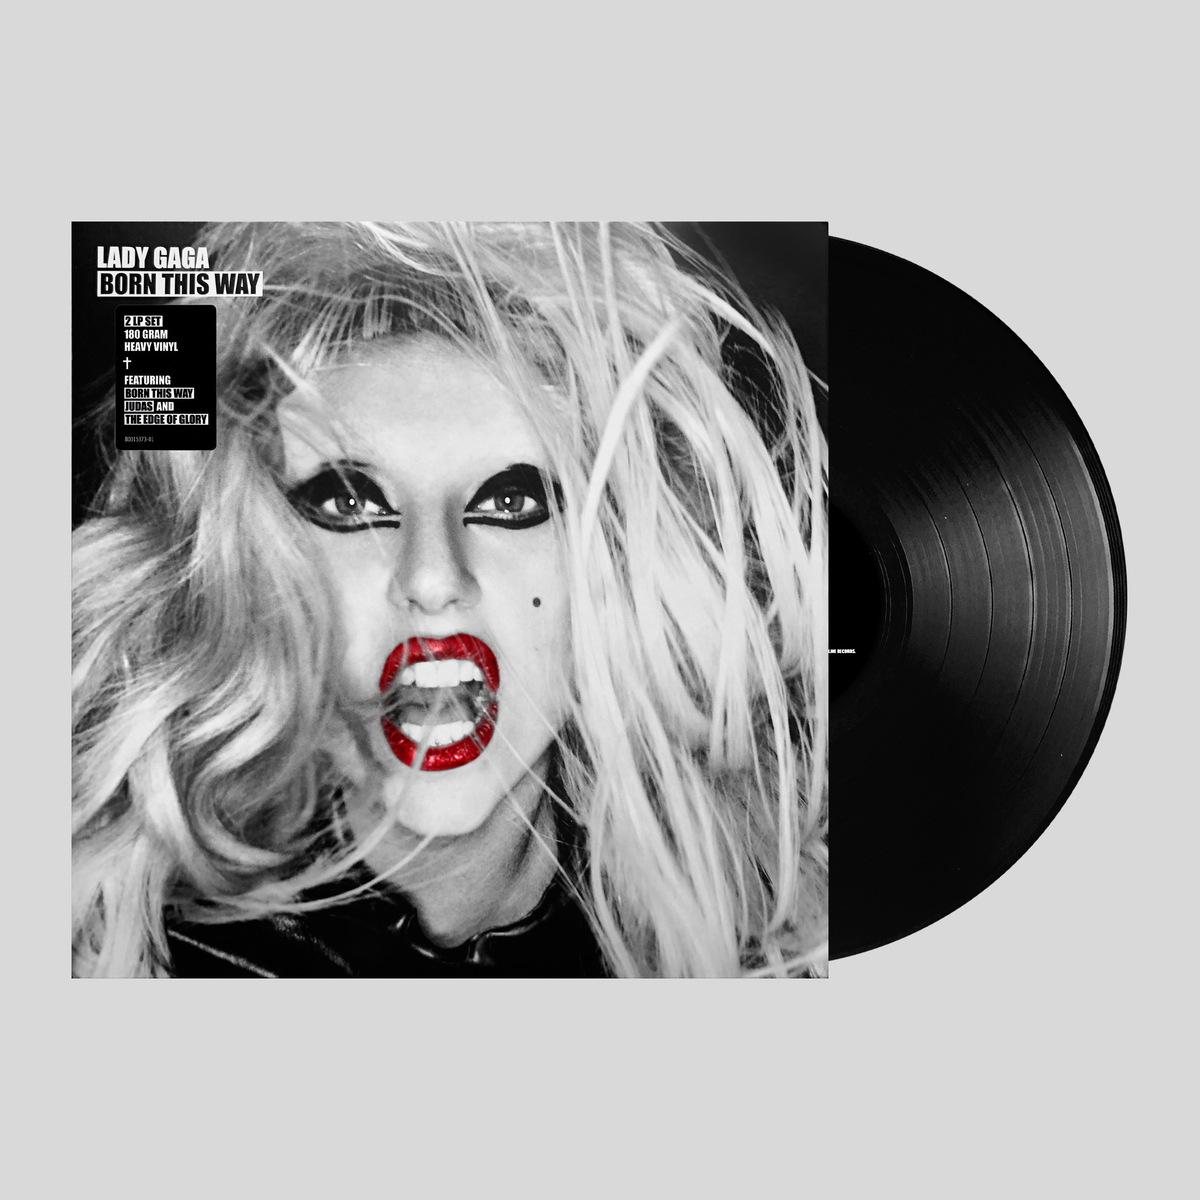 Born This Way (Vinyl)